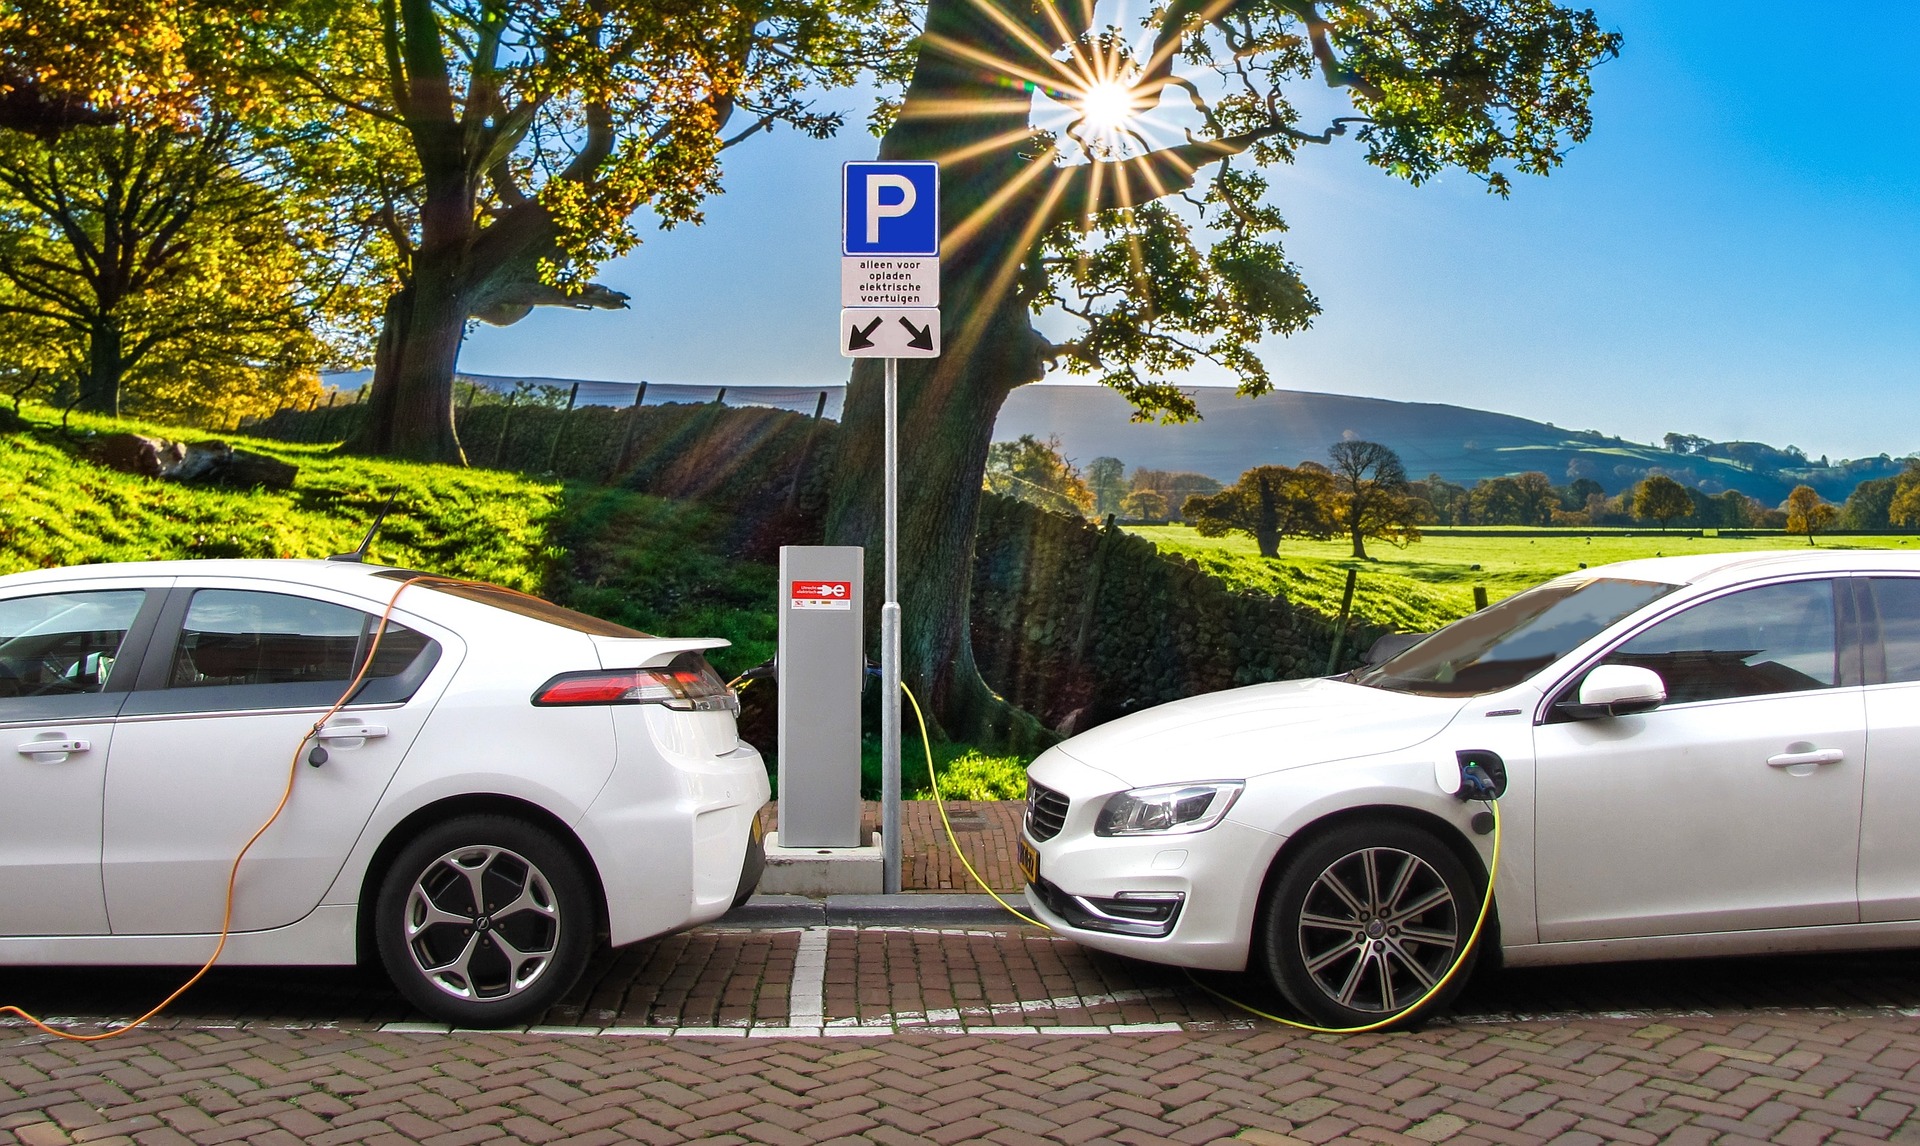 [NEWS]Calabria: electric car developments